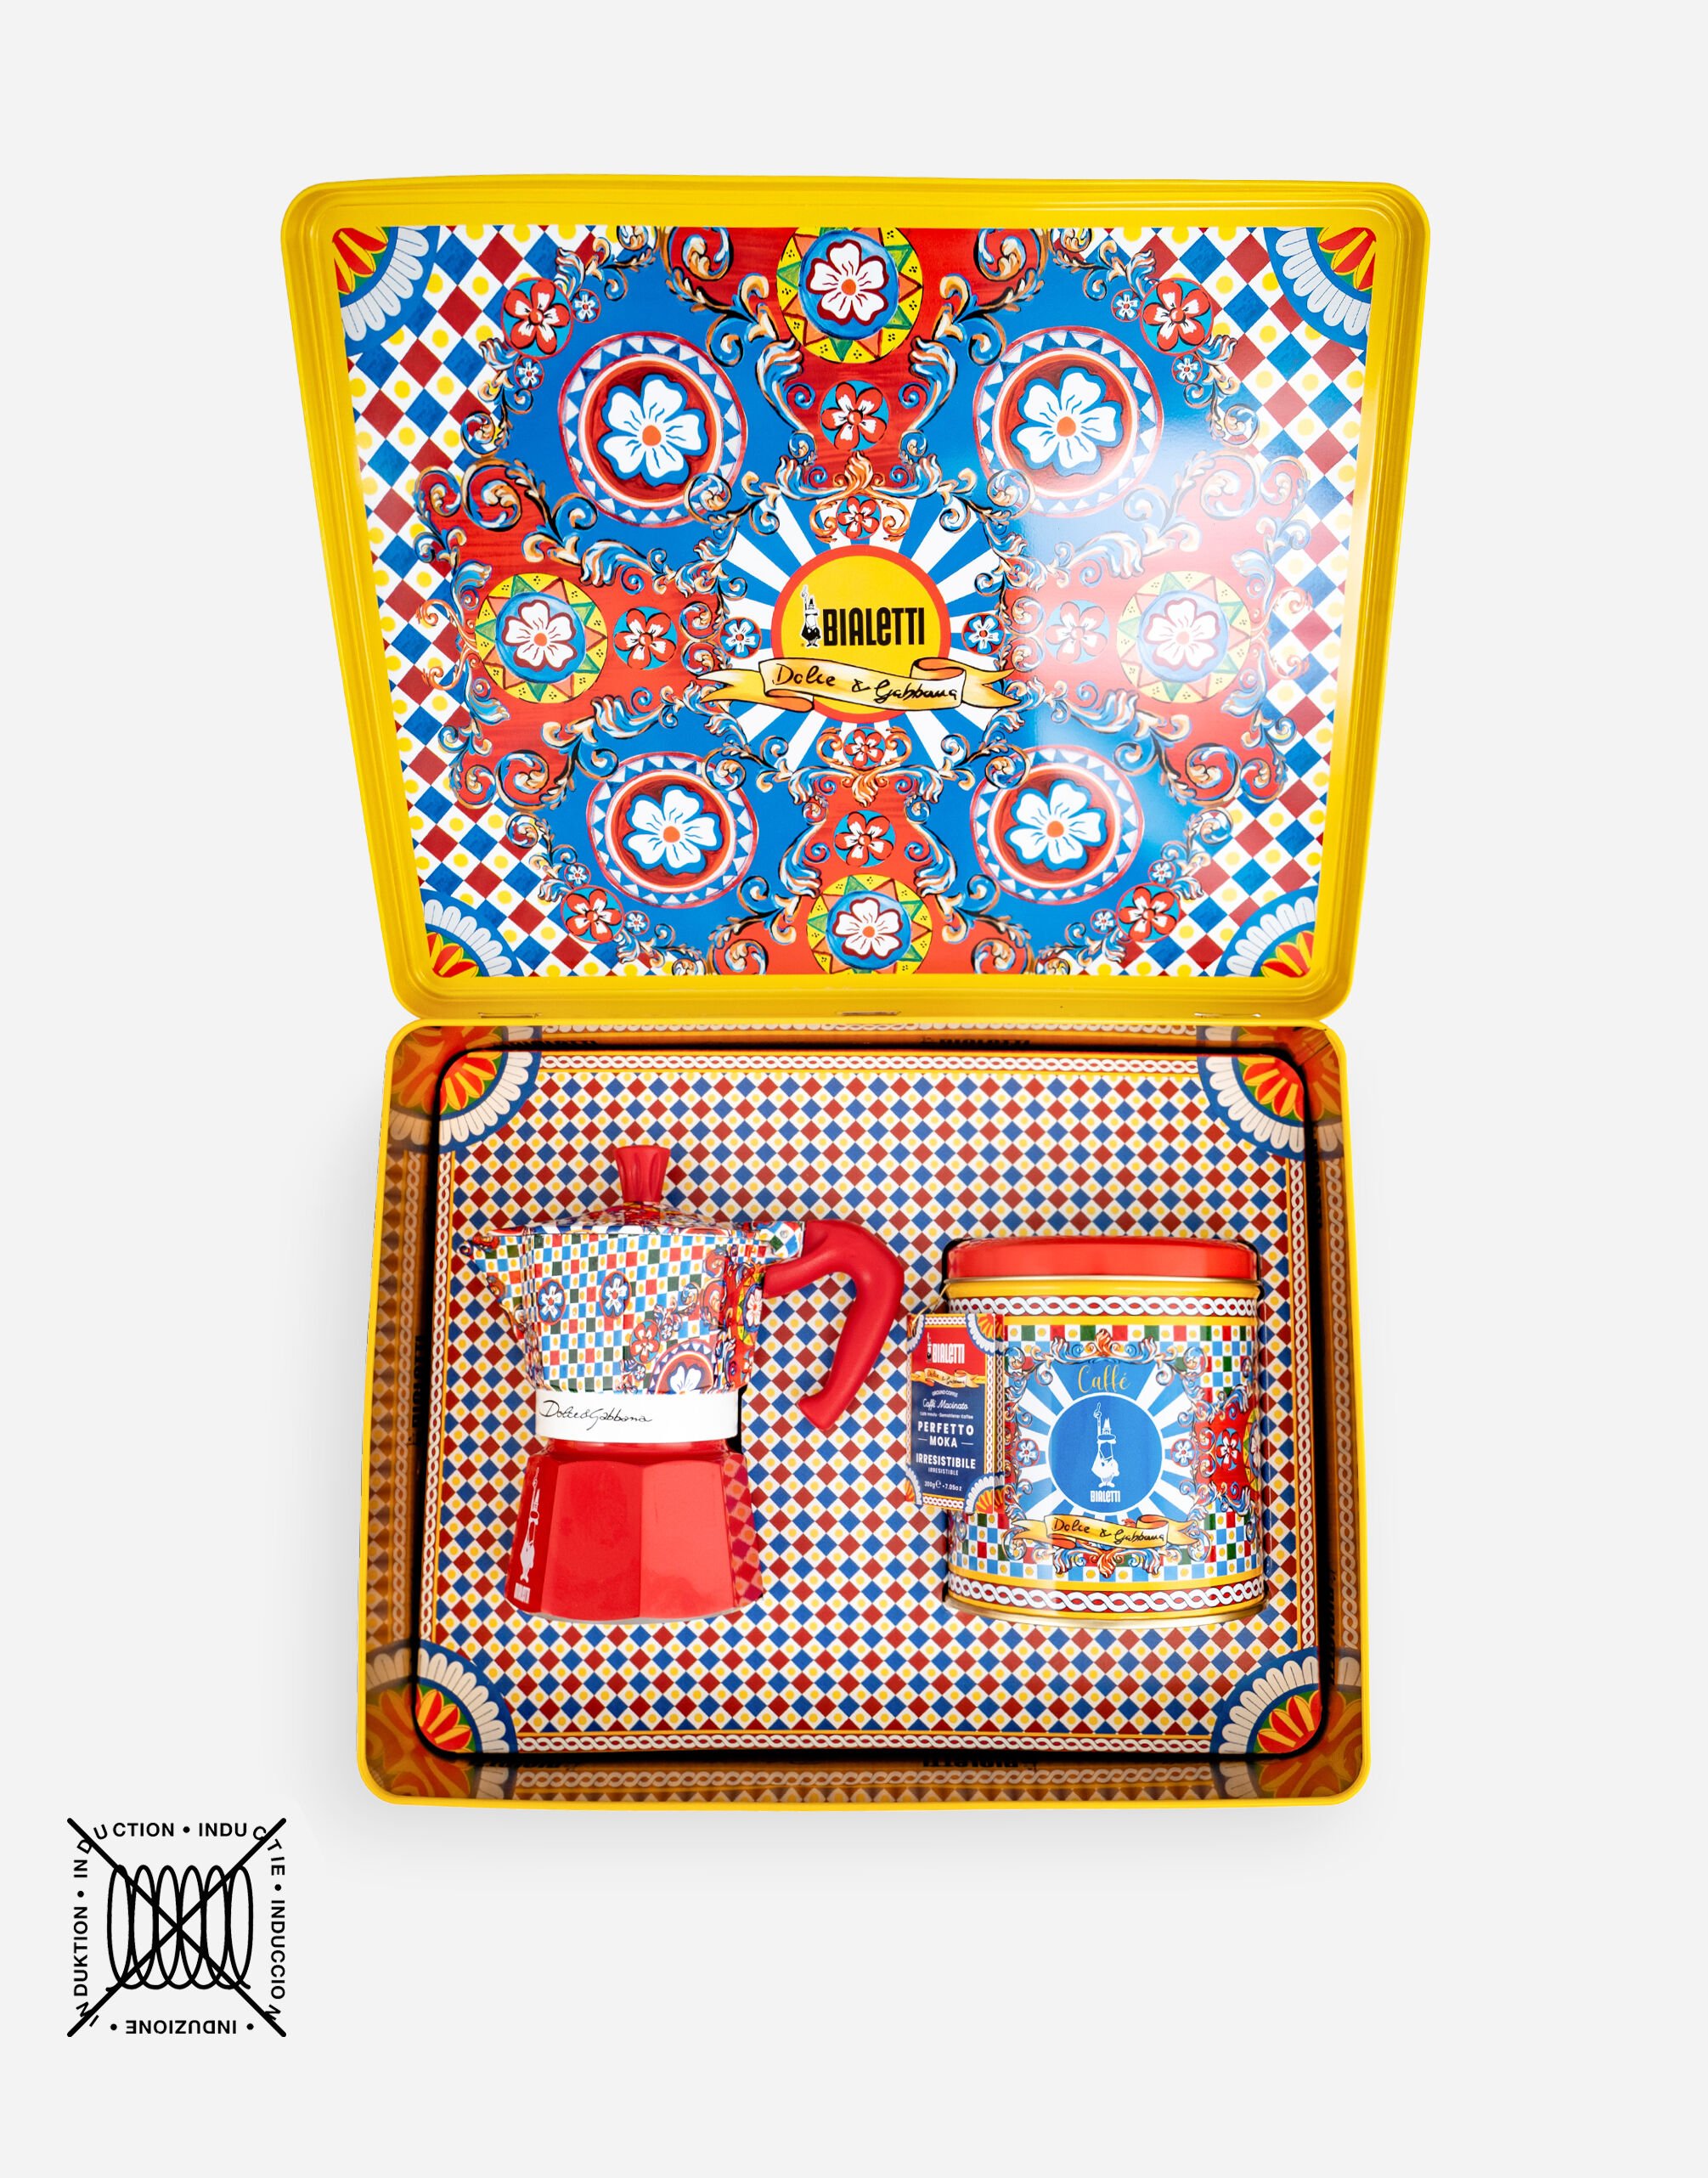 Dolce & Gabbana صندوق آلة موكا متوسطة + قهوة PERFETTO BIALETTI من DOLCE&GABBANA متعدد الألوان TCCE15TCAEF